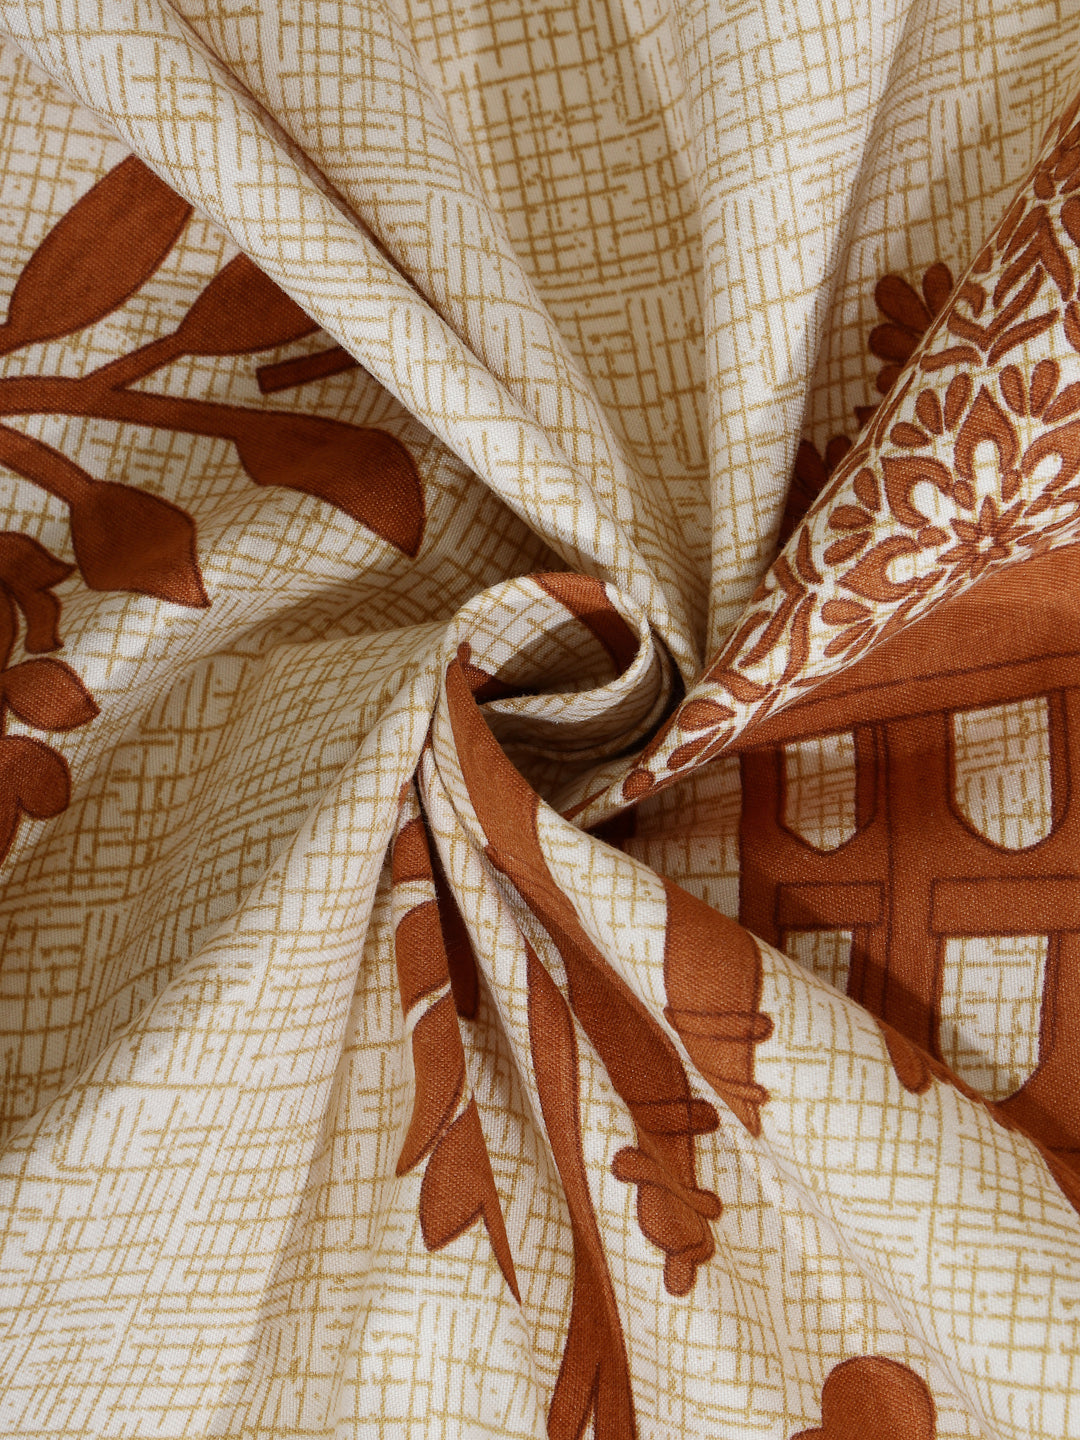 Arrabi Multi Leaf TC Cotton Blend Super King Size Bedsheet with 2 Pillow Covers (270 x 260 cm)